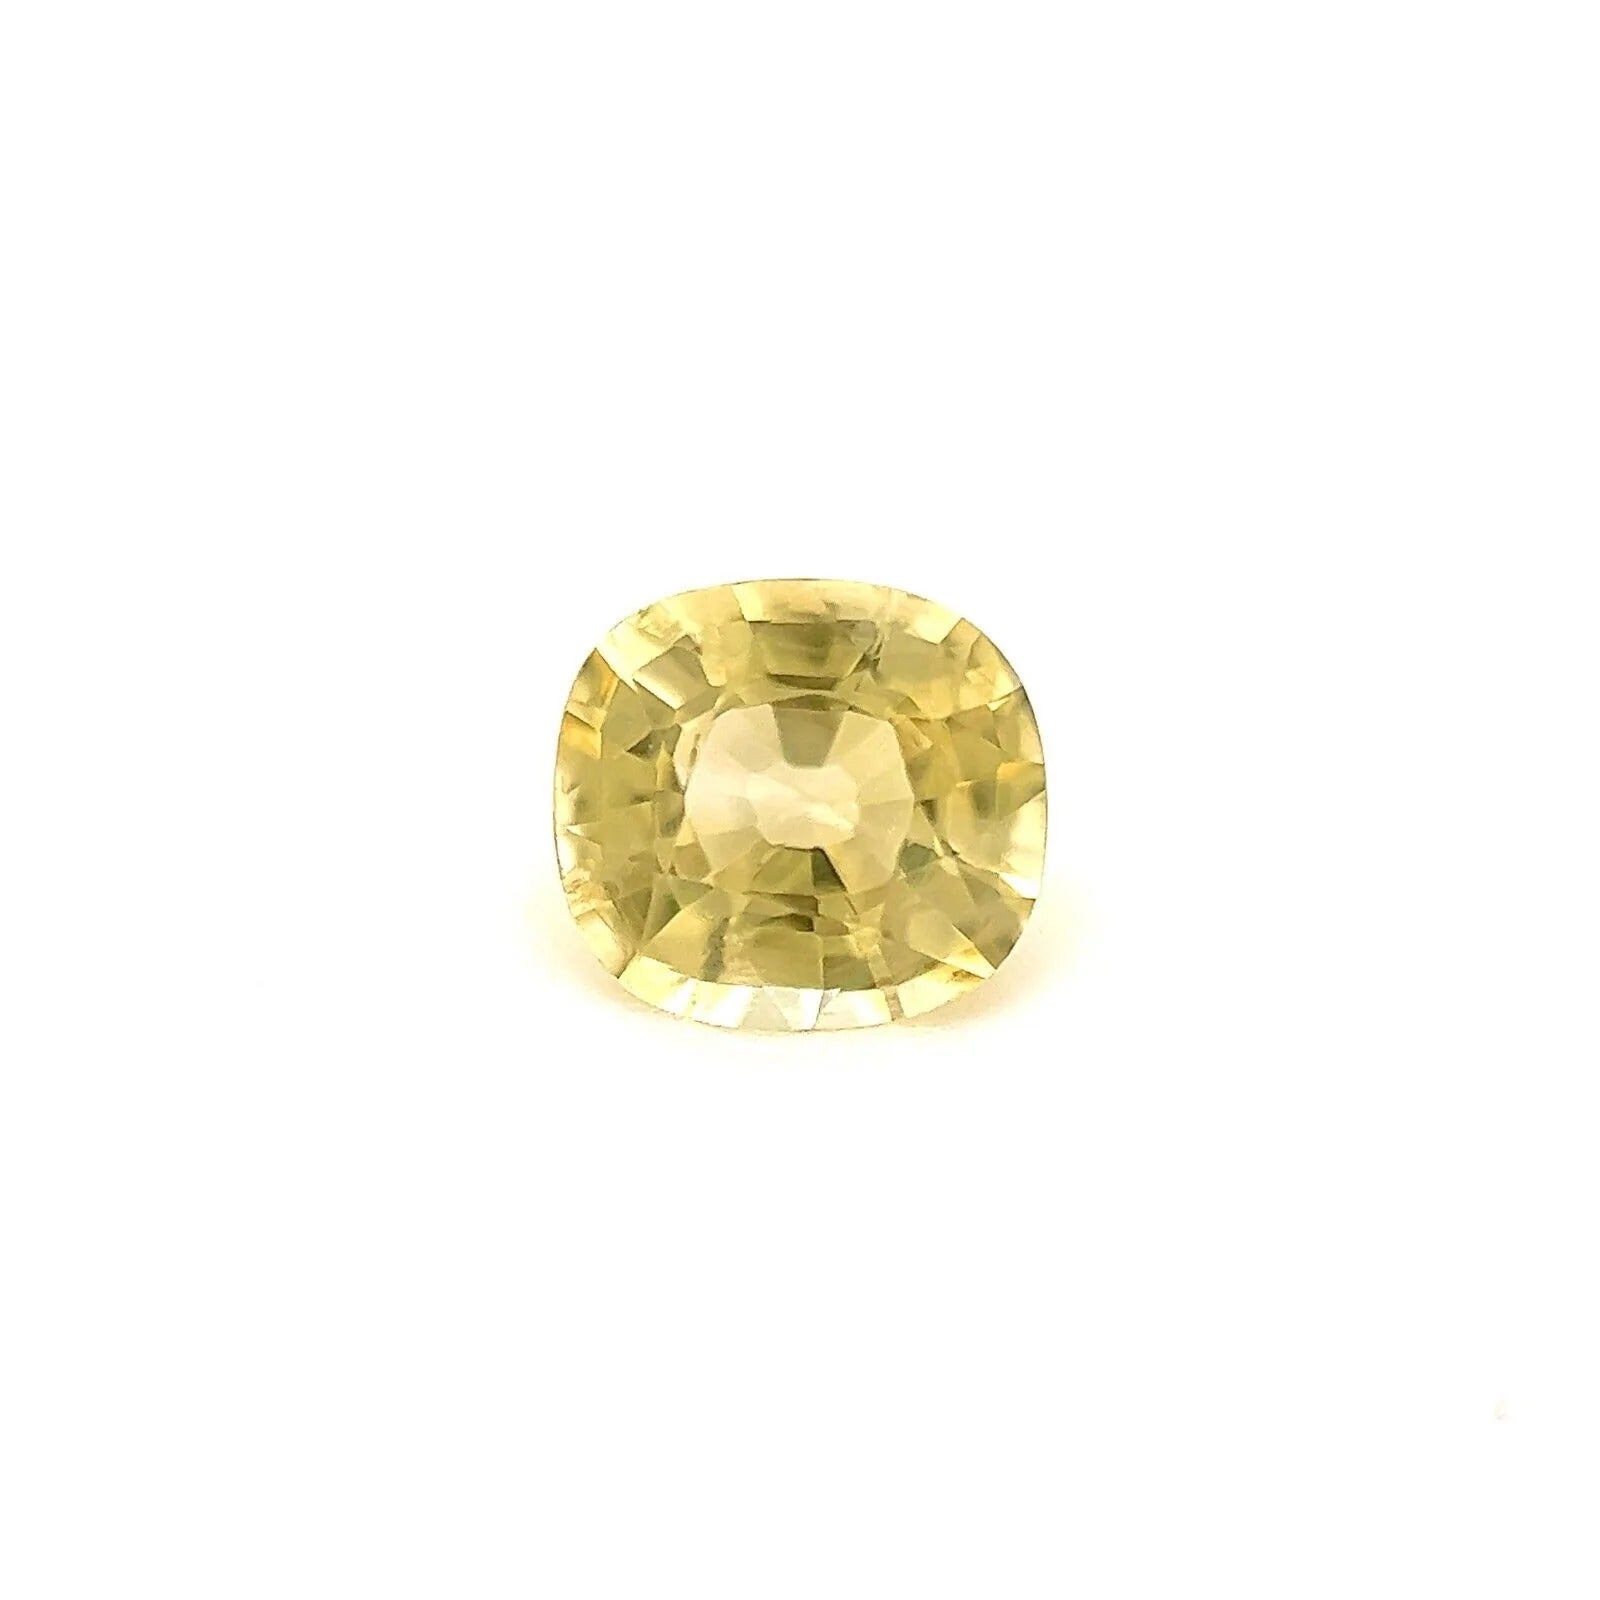 Natural Light Yellow Ceylon Sapphire 0.55ct Cushion Cut Rare Loose Gem